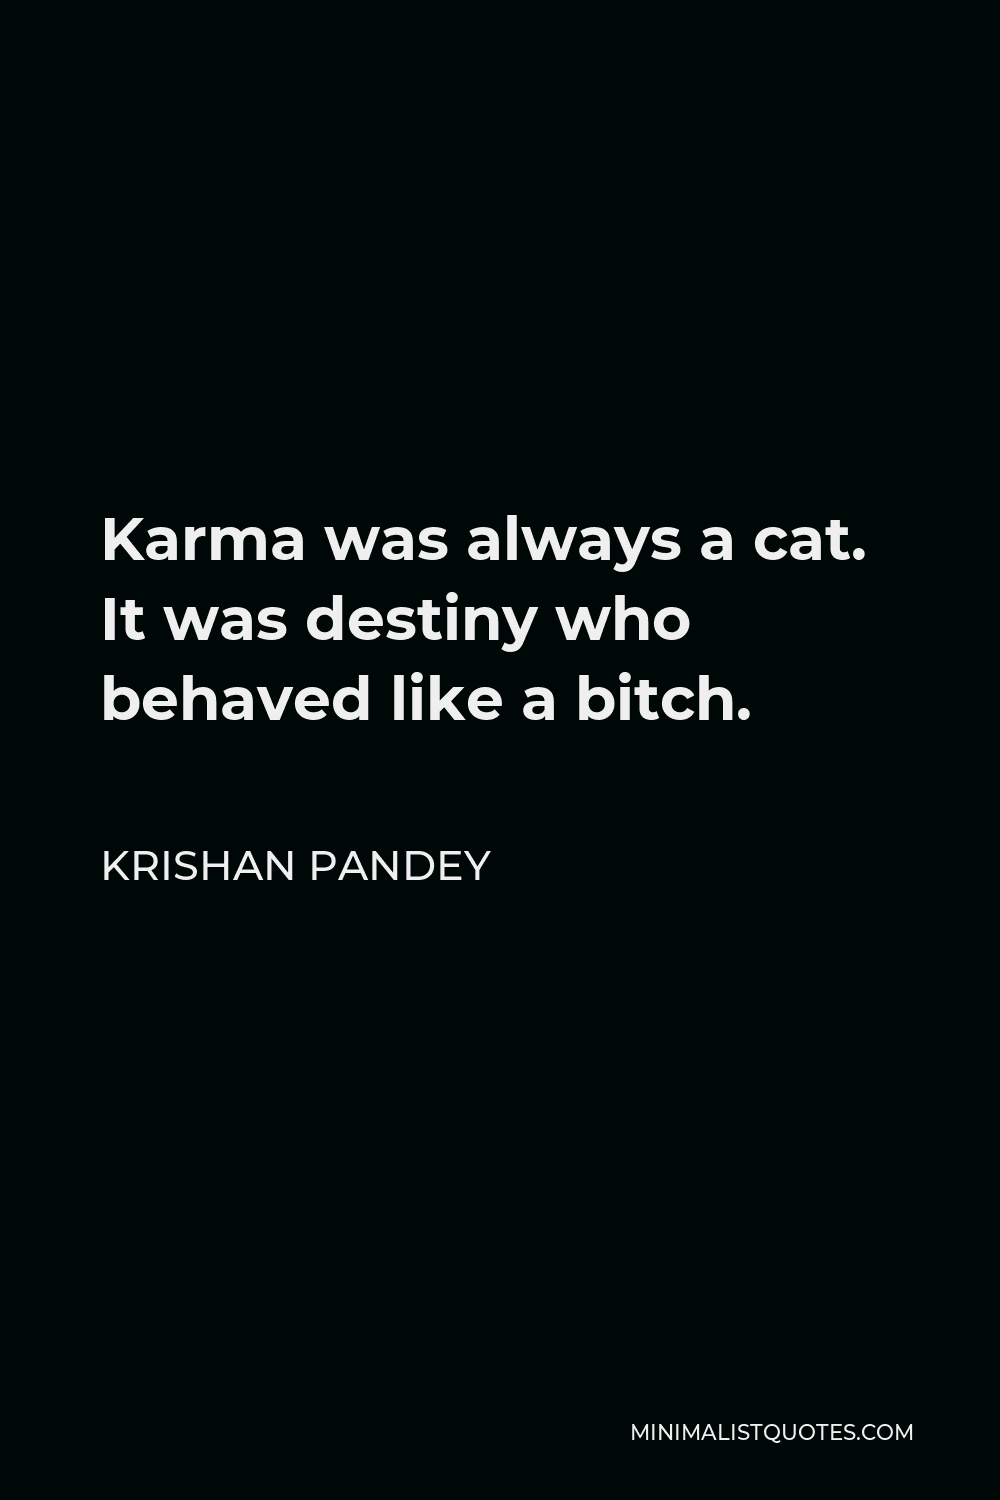 Krishan Pandey Quote - Karma was always a cat. It was destiny who behaved like a bitch.